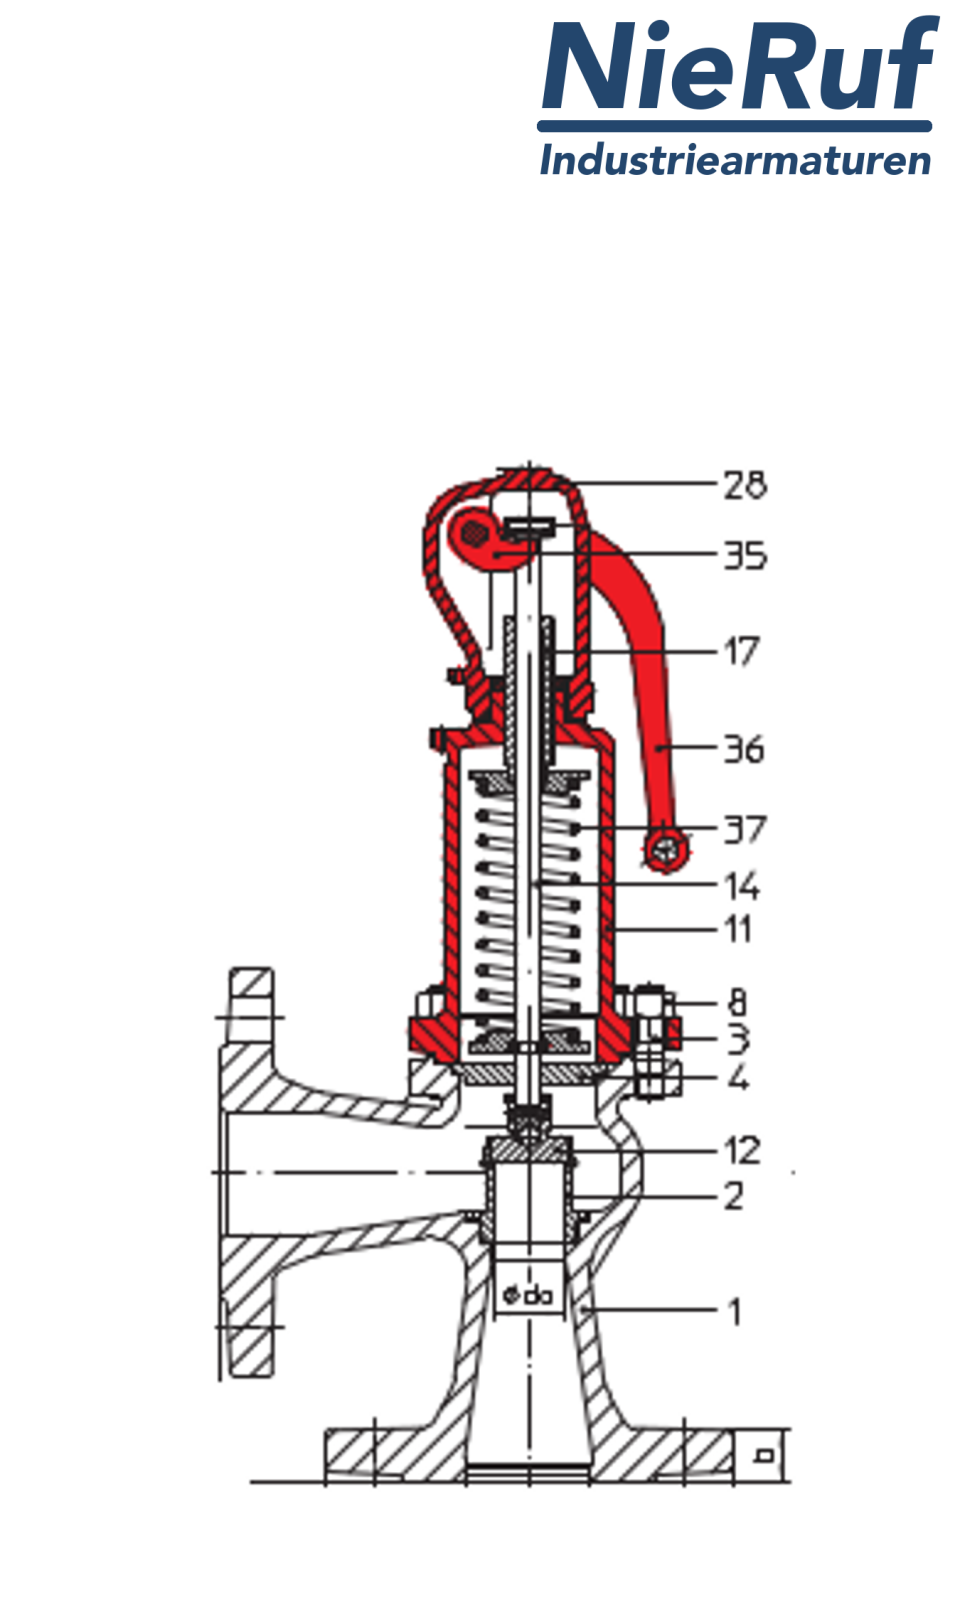 flange-safety valve DN65/DN65 SF02, cast steel 1.0619+N FPM, with lever